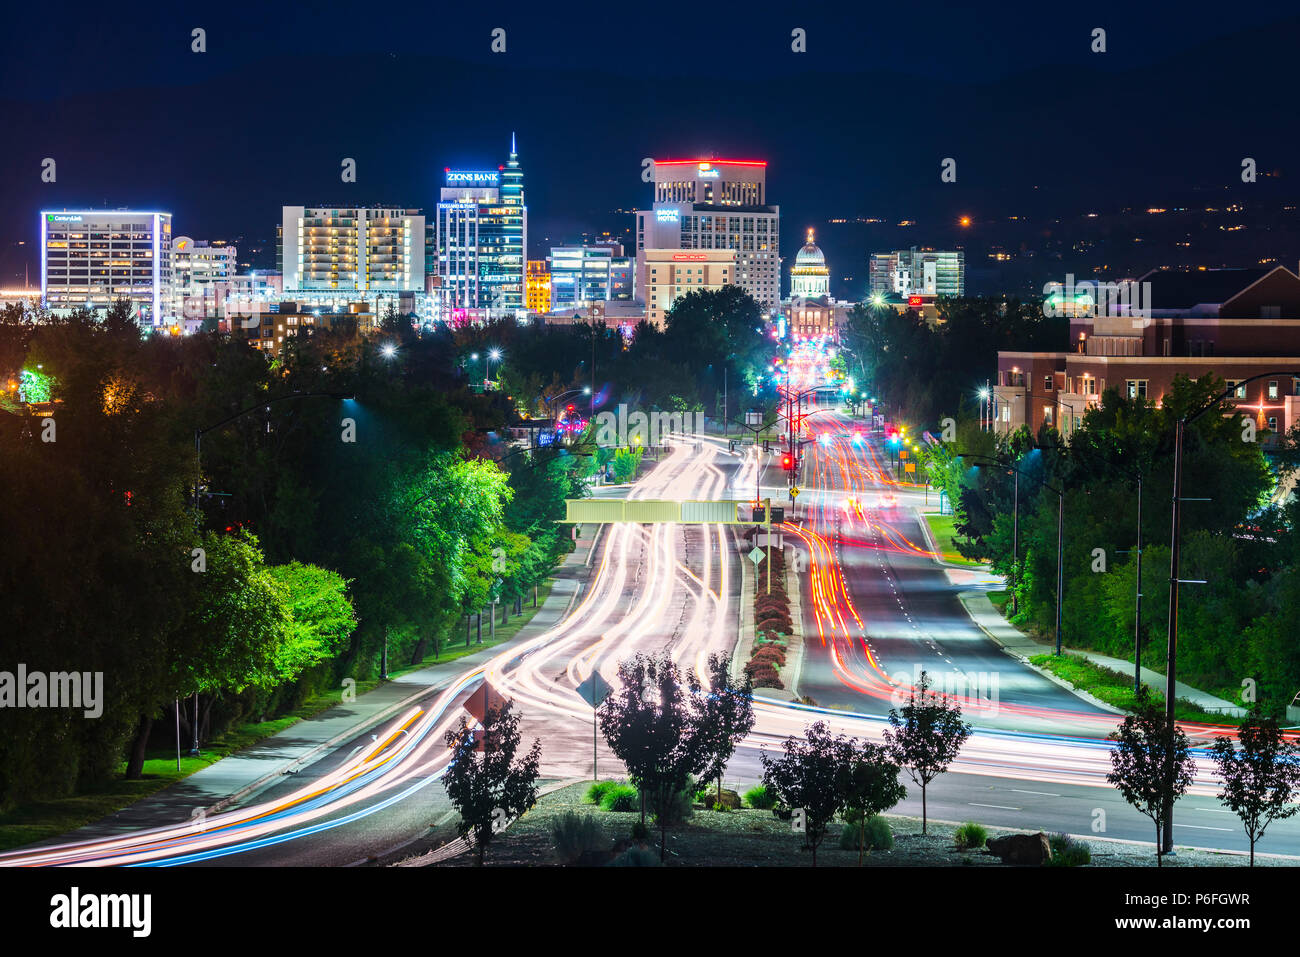 Boise,idaho,usa 2017/06/15 : Boise cityscape at night with traffic light. Stock Photo